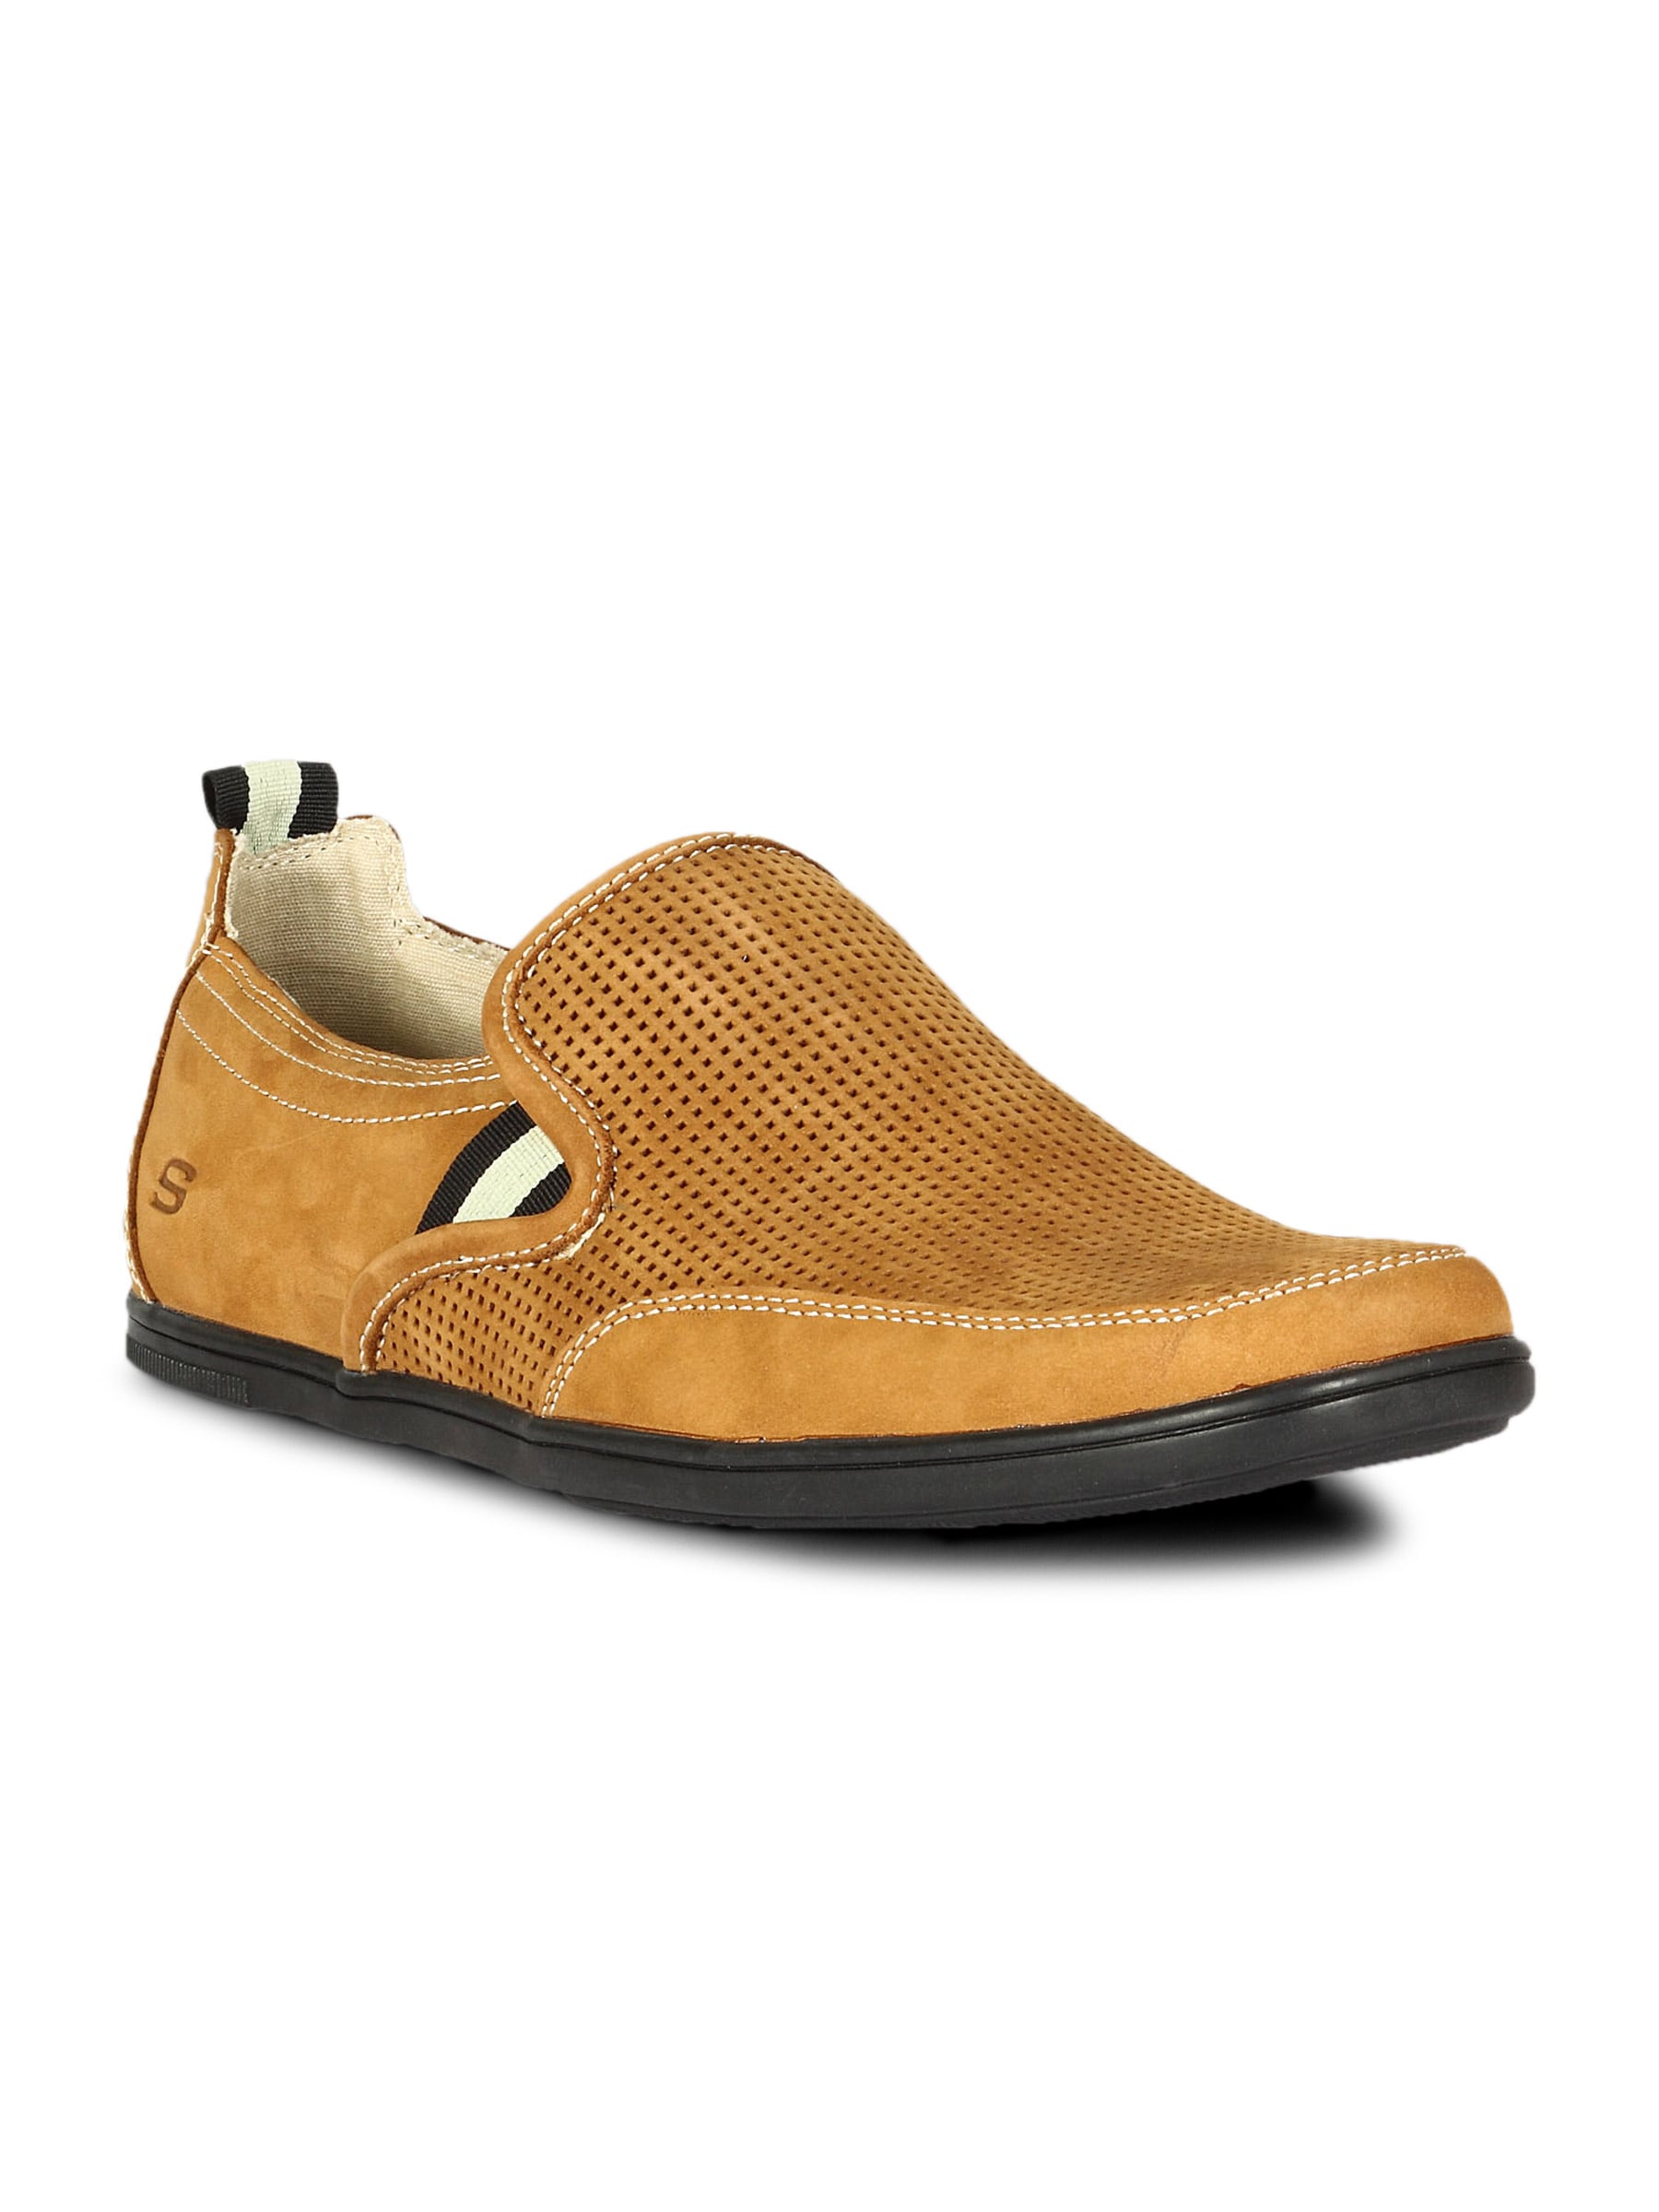 Skechers Men's Casual Brown Lifestyle Shoe